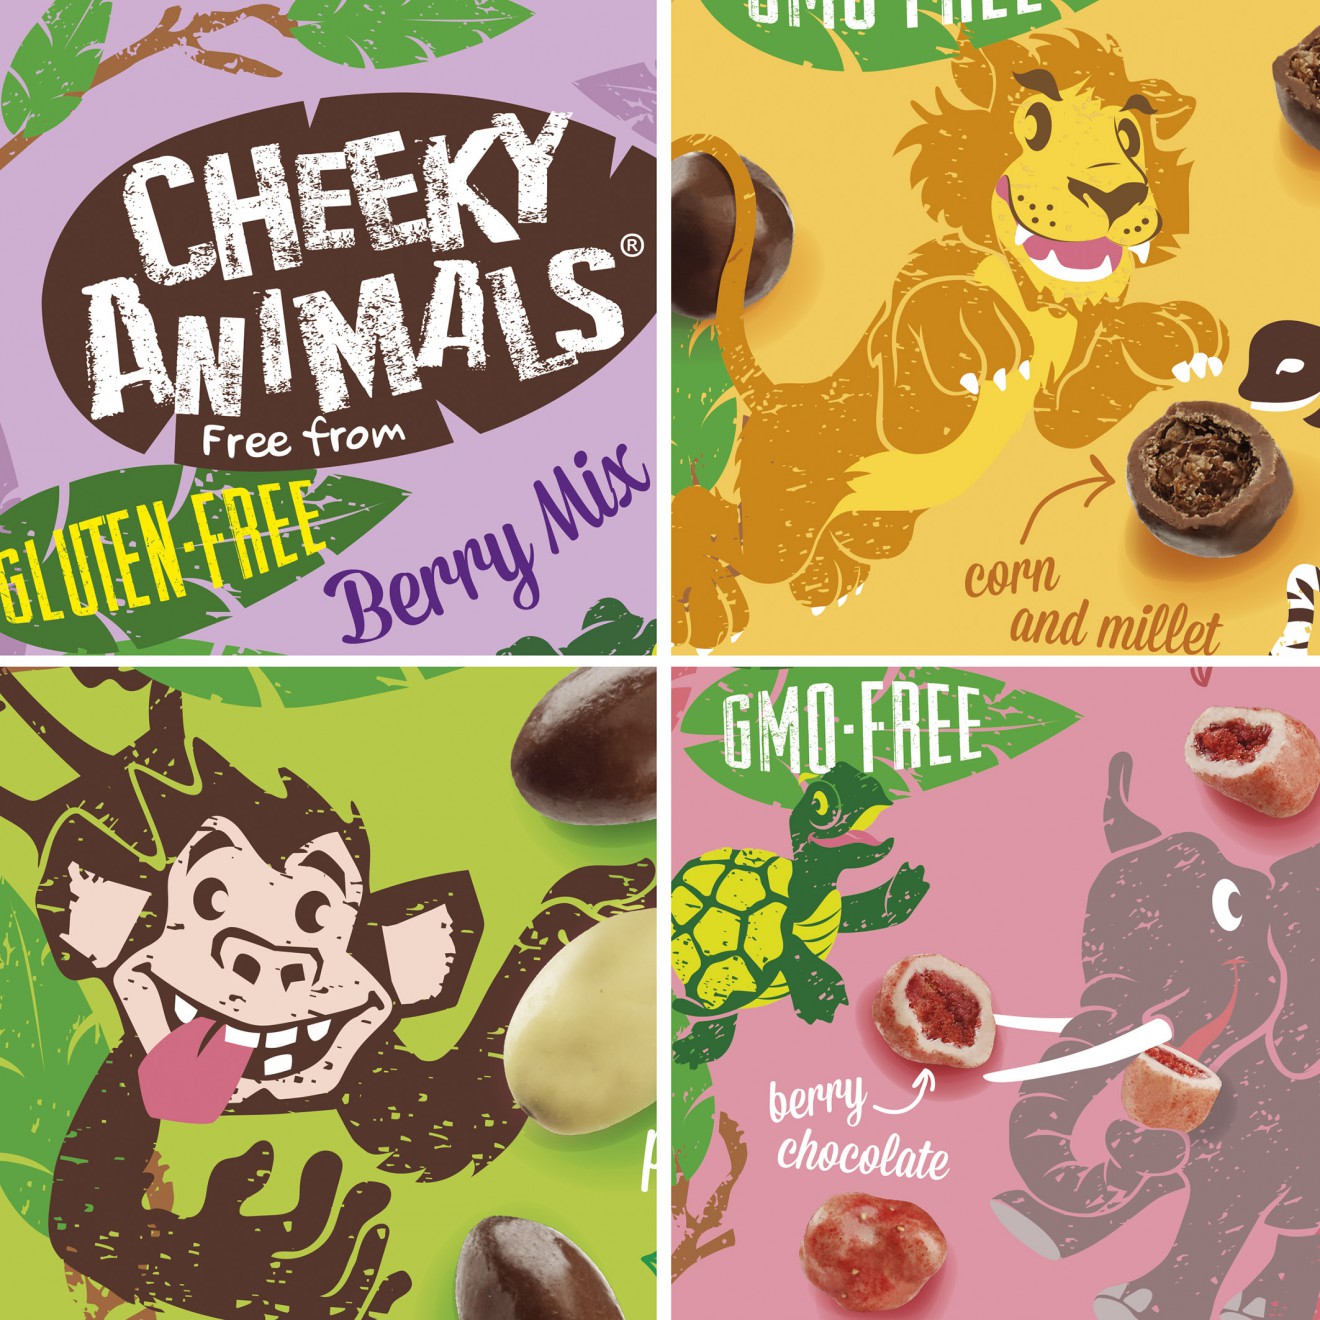 Quatre Mains package design - Cheeky animals, Gluten free, Berry mix